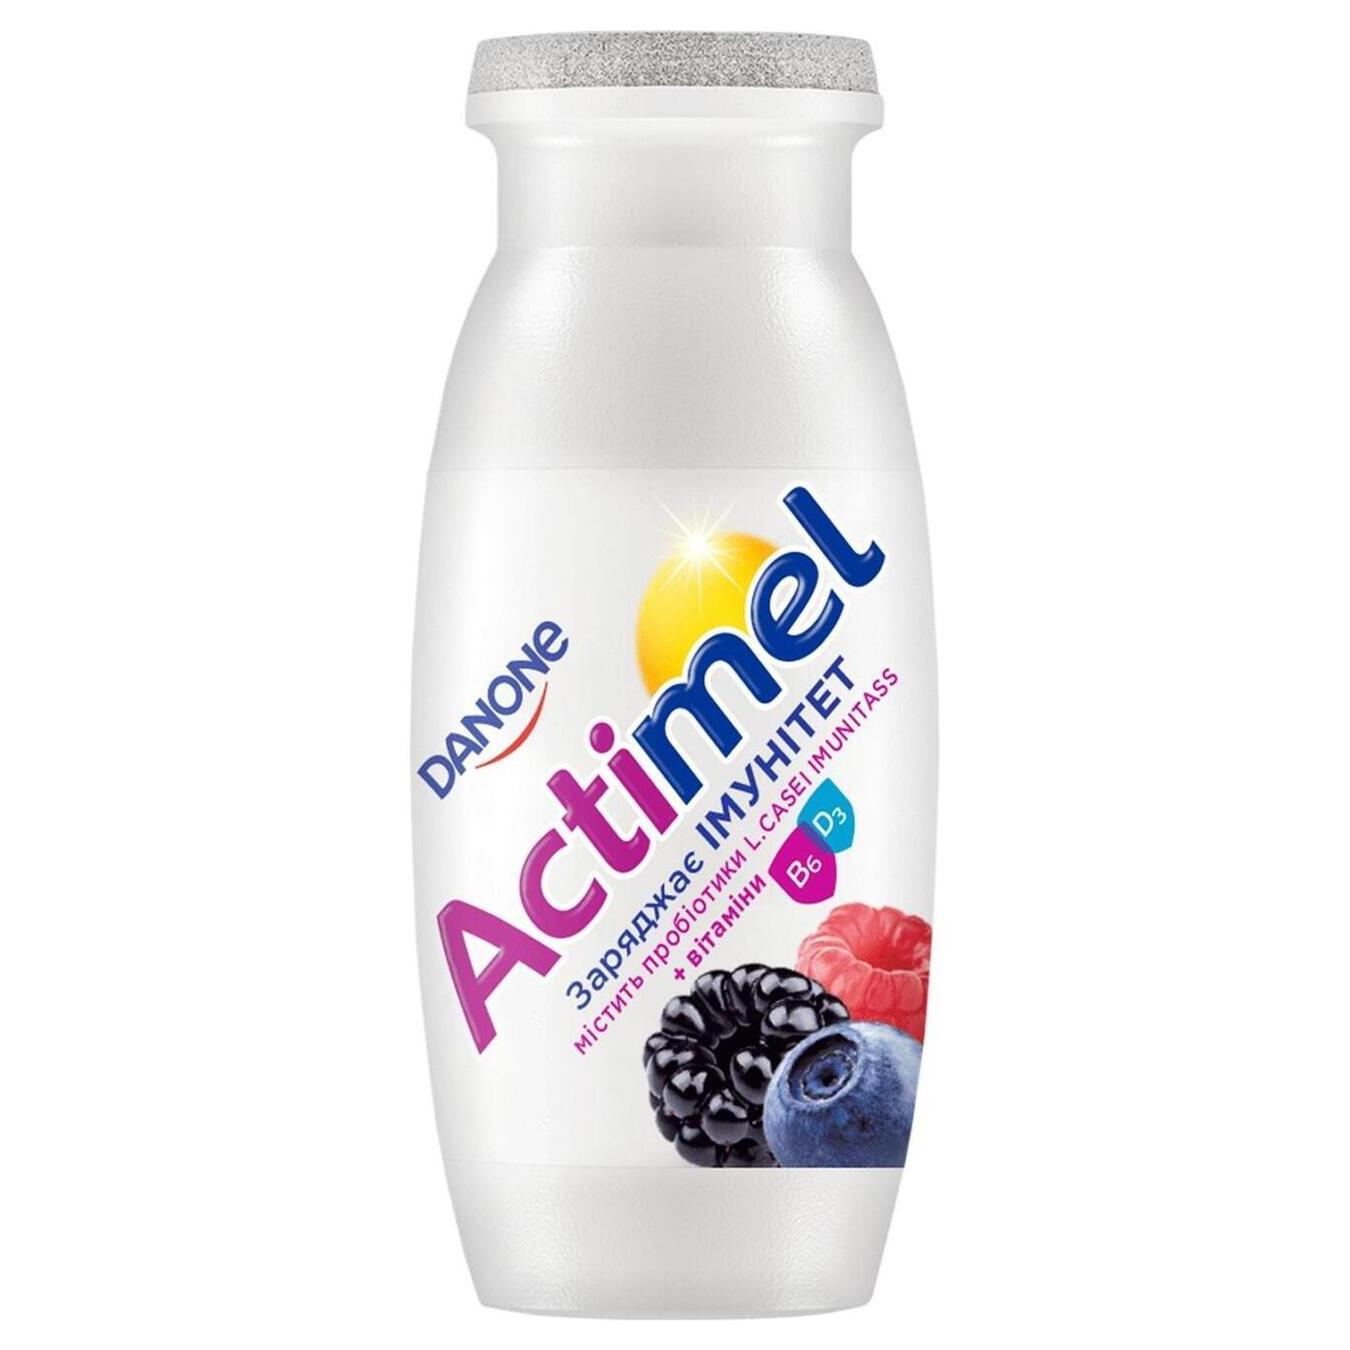 Fermented milk product Actimel wild berries 1.4% 100g